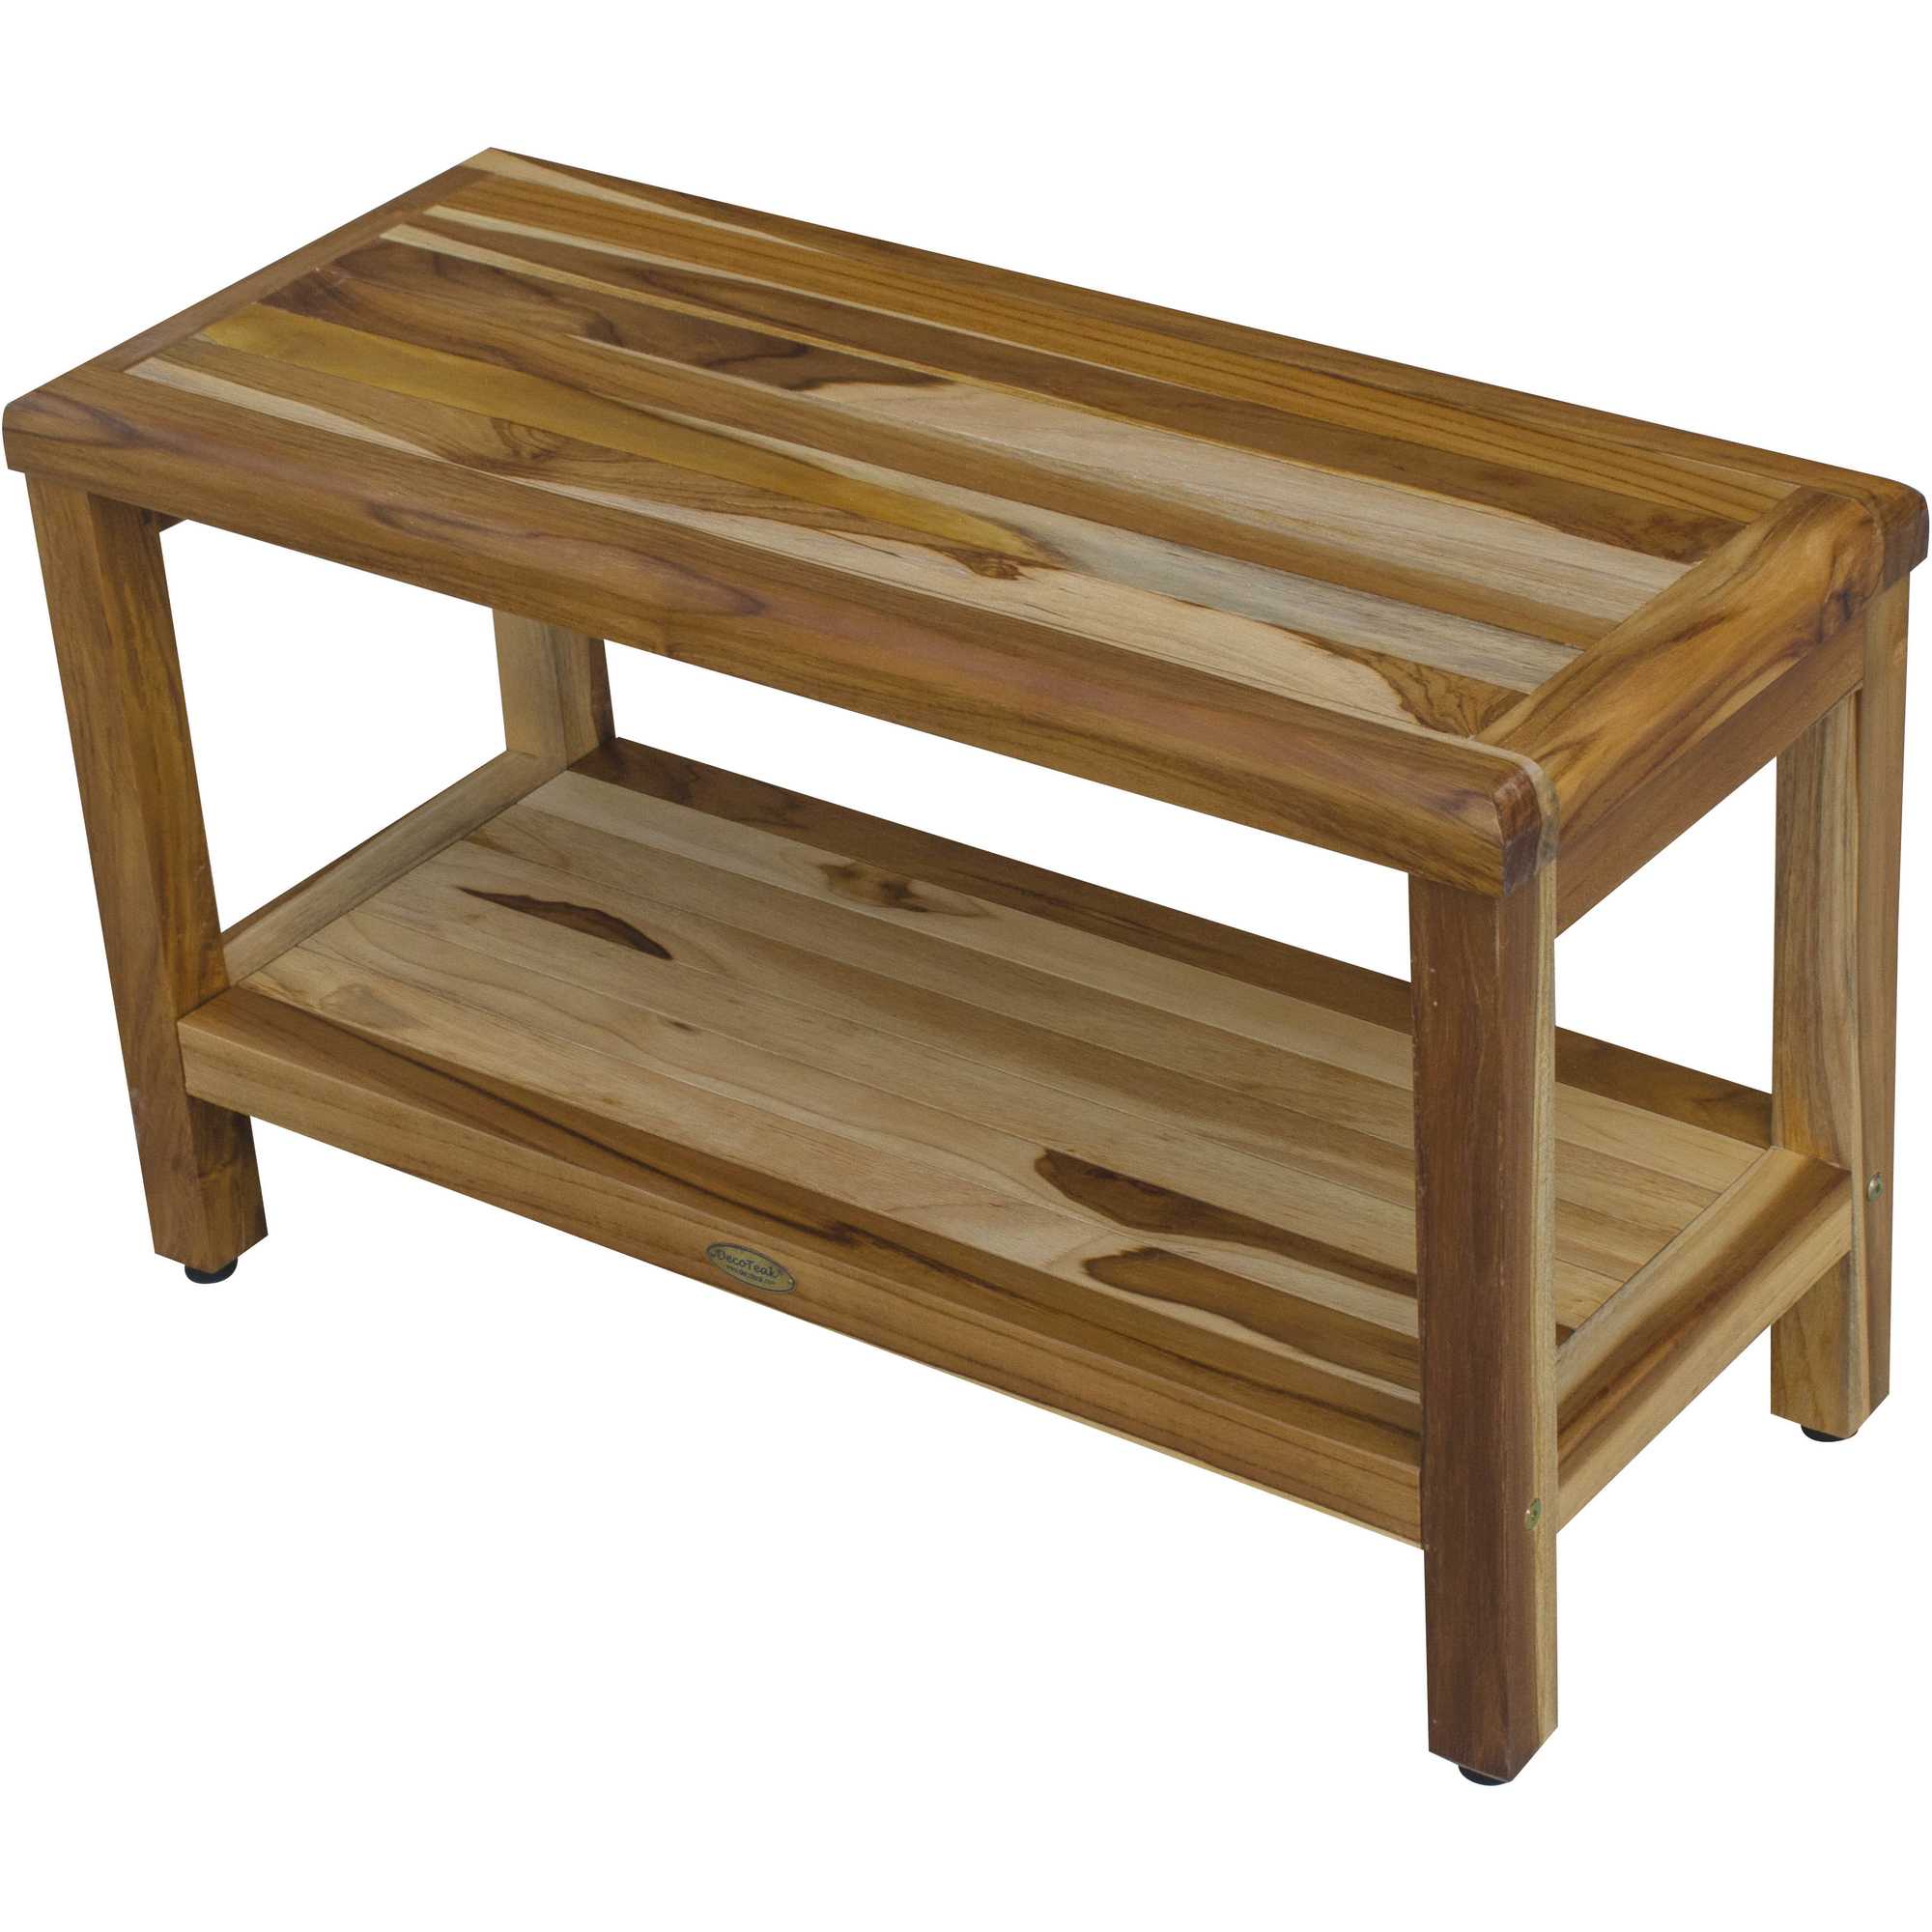 Rectangular Teak Shower Bench with Shelf in Natural Finish